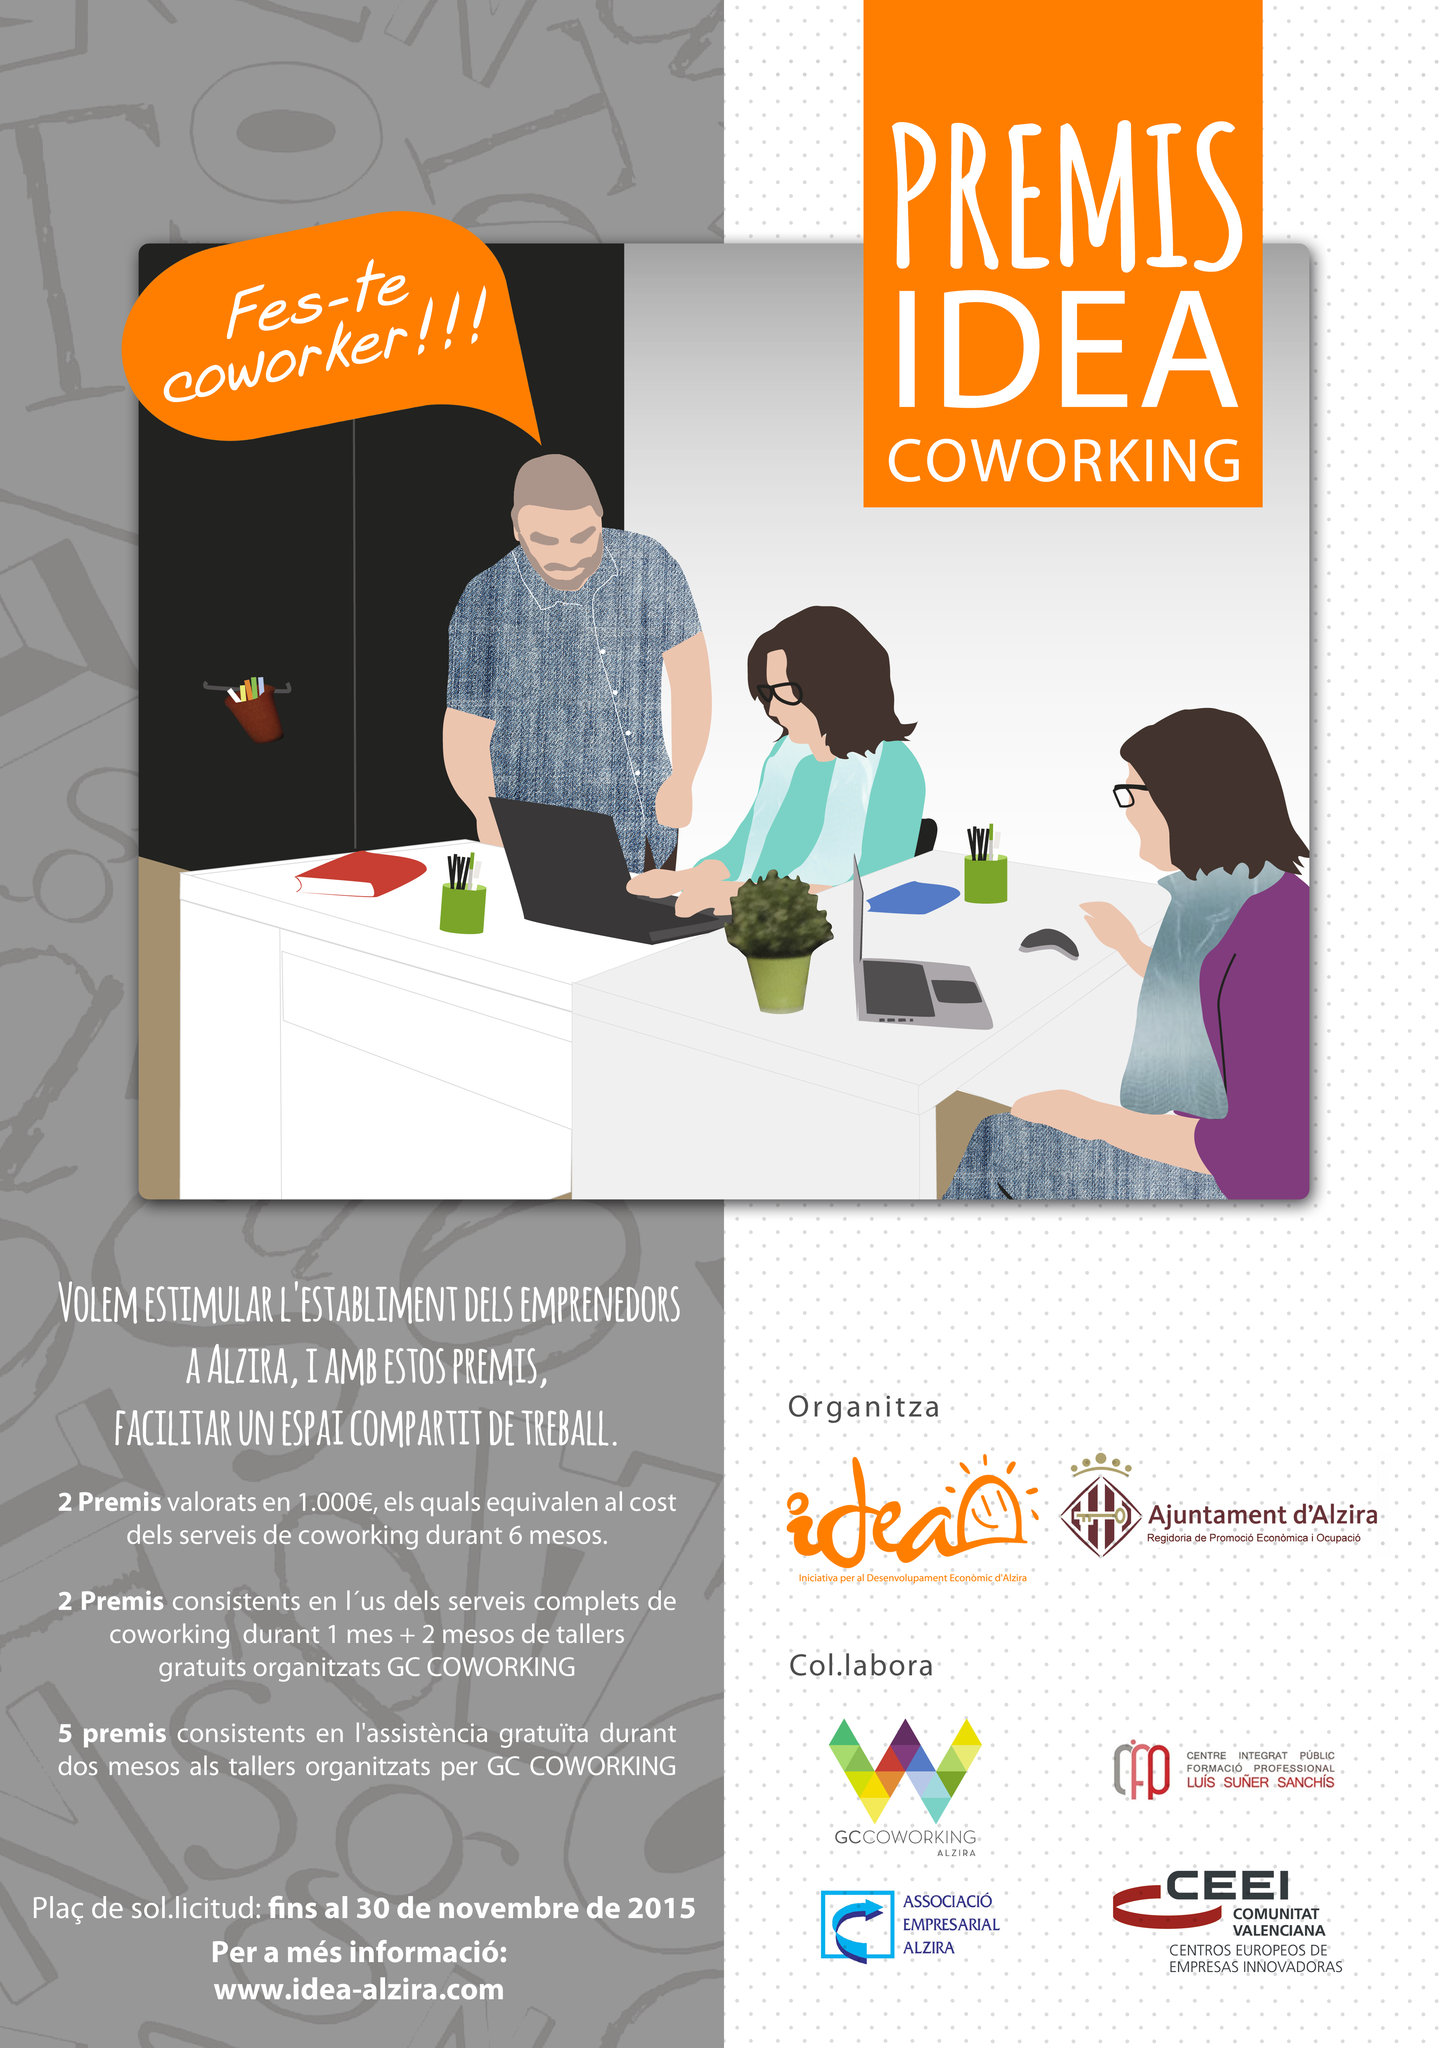 Premios Idea-Coworking 2015